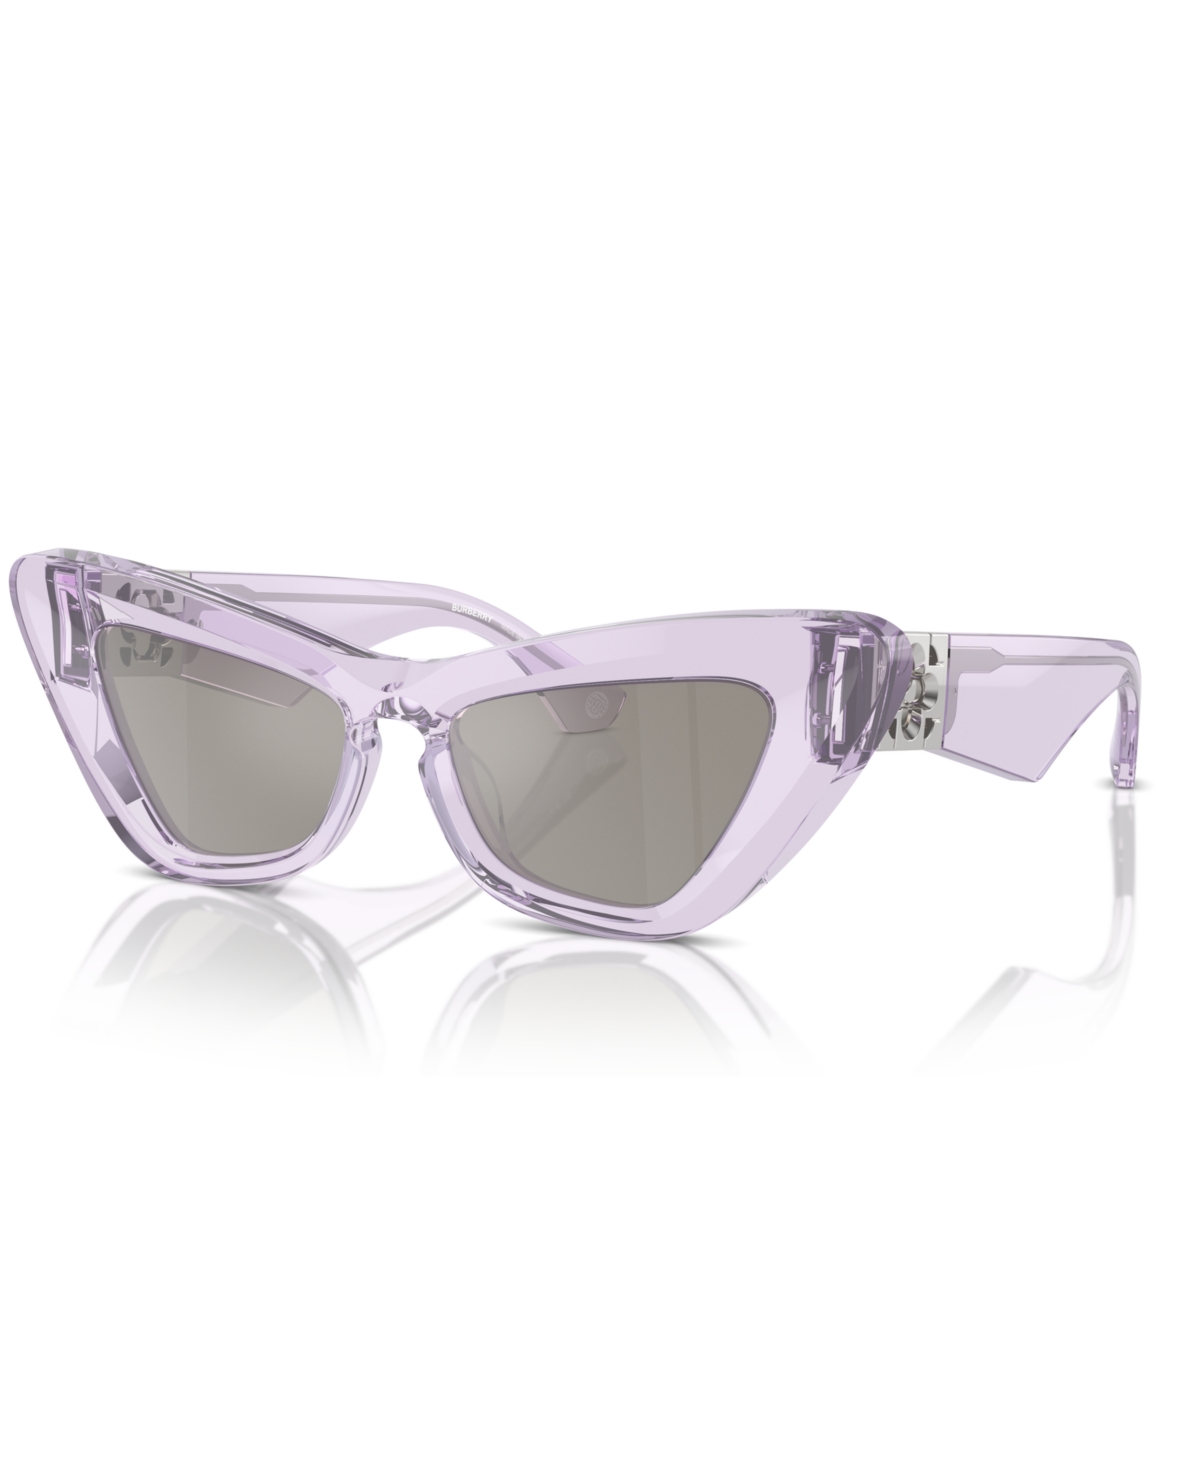 Burberry Women's Sunglasses, Be4421u In Violet